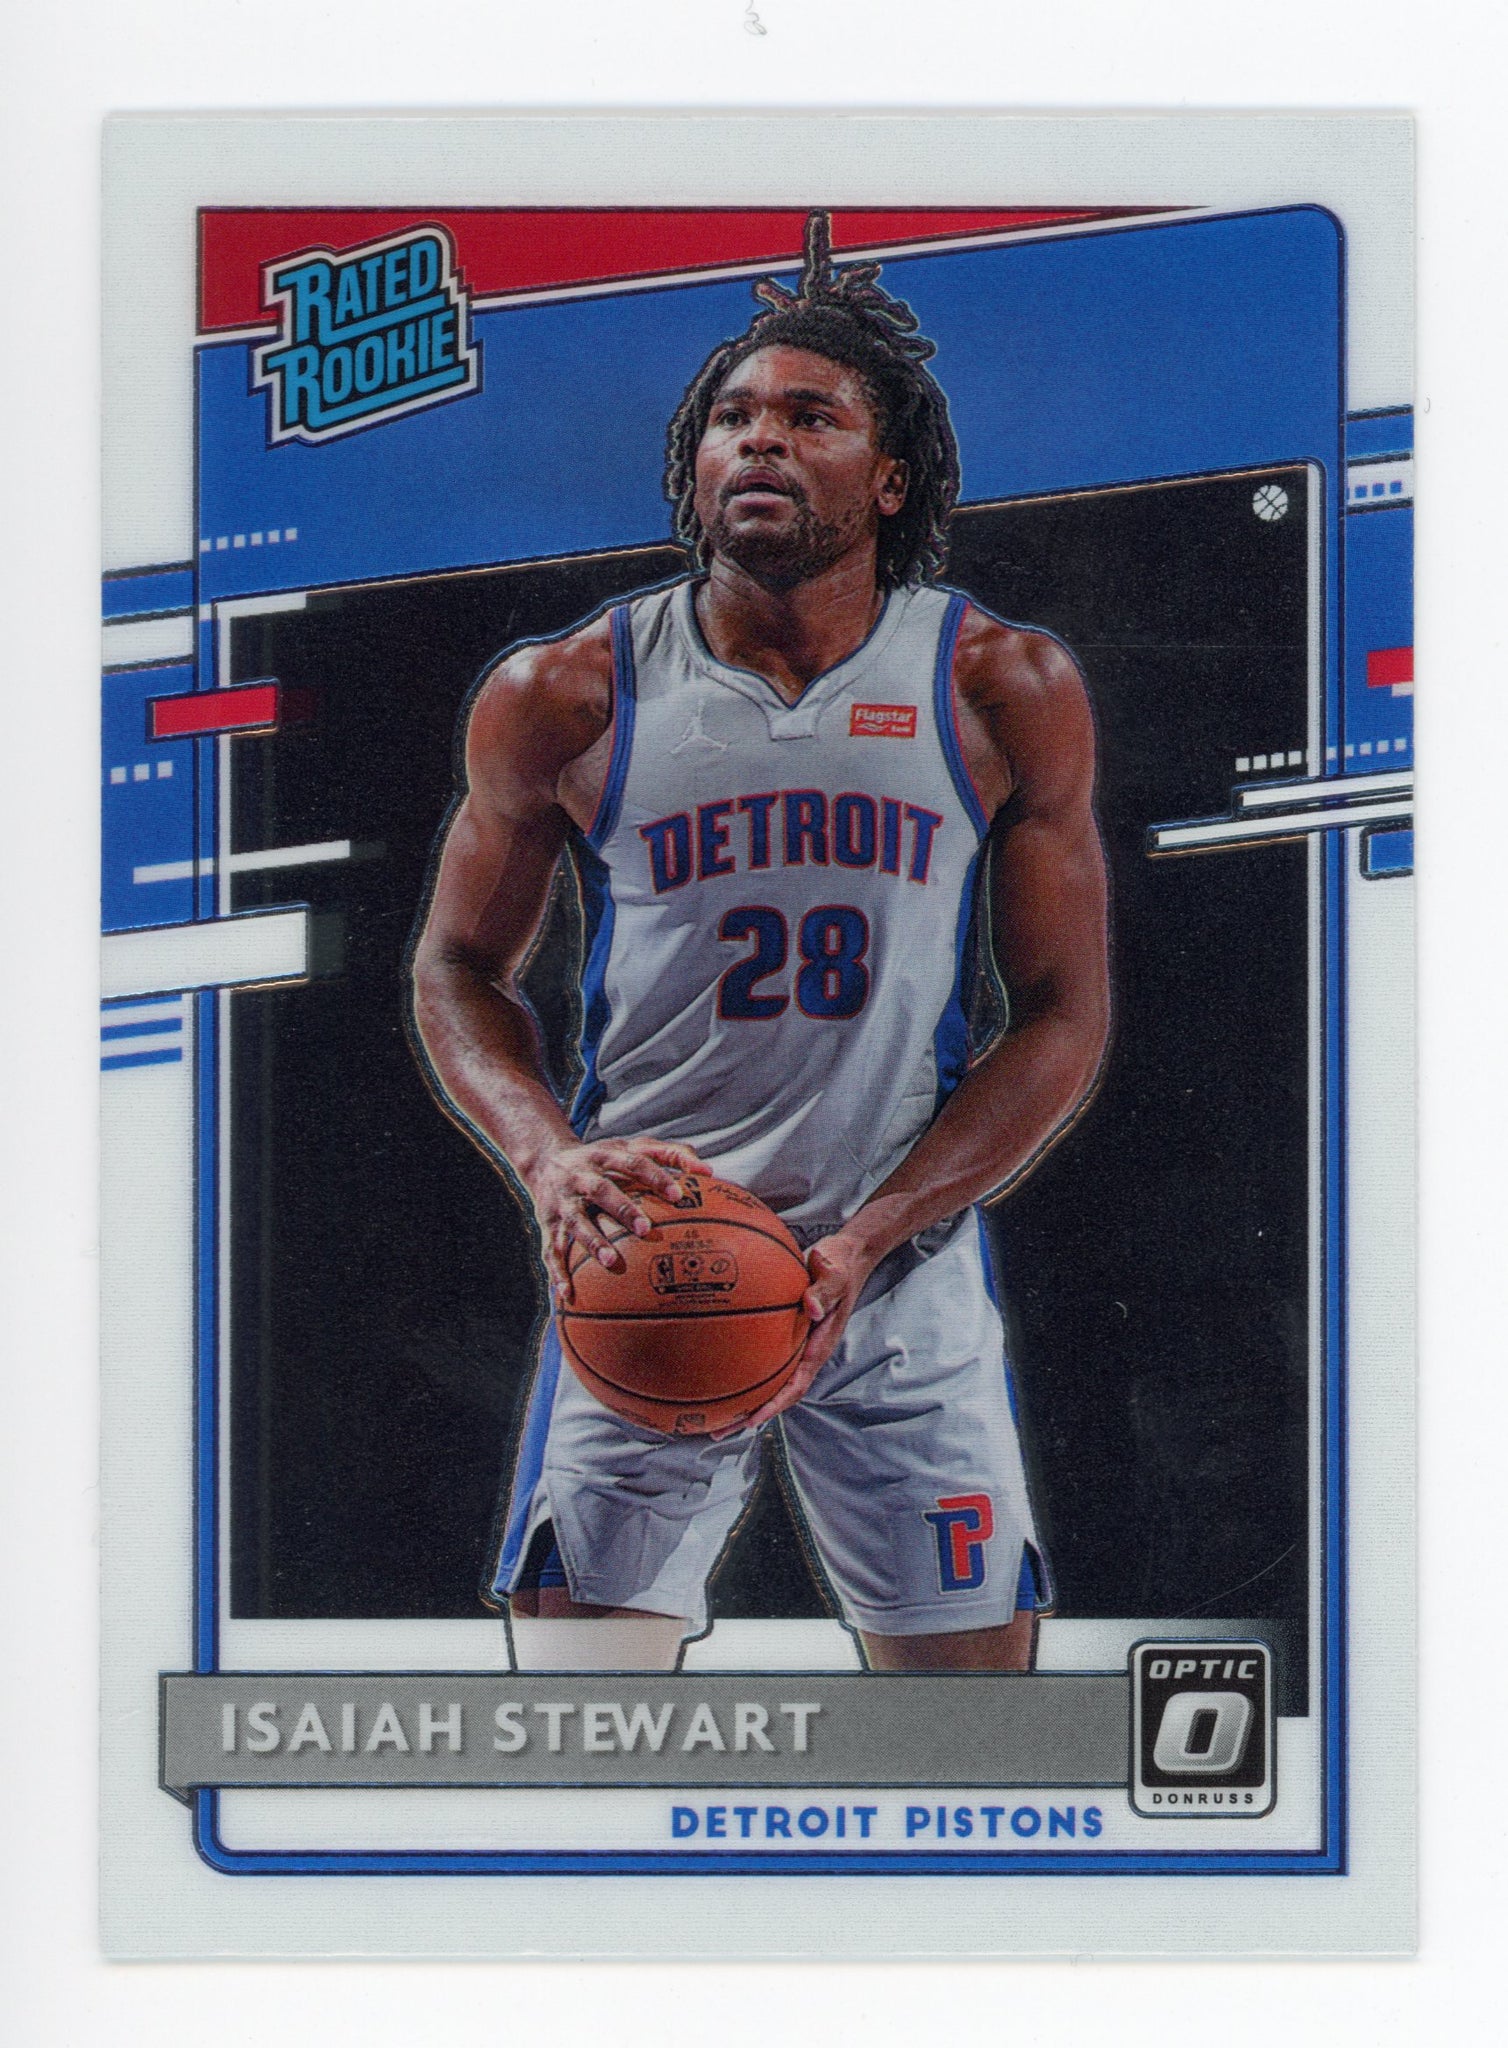 2020-2021 Isaiah Stewart Rated Rookie  Panini Detroit Pistons # 166